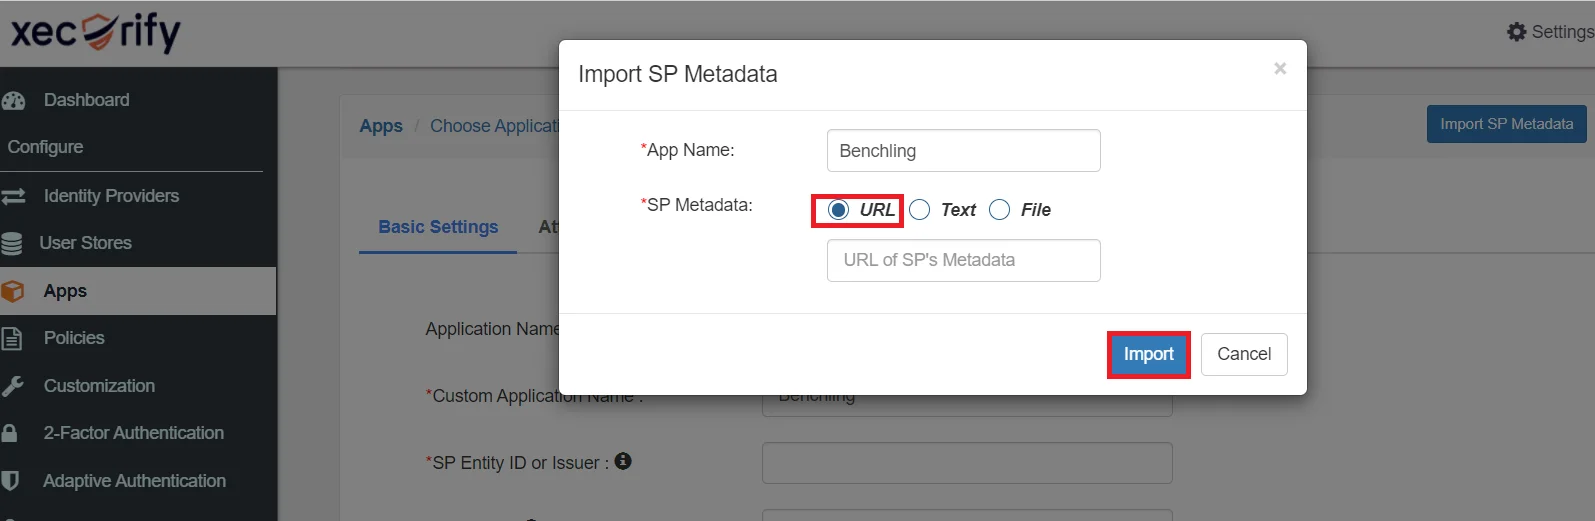 Benchling Single Sign-On (SSO) Upload SP Metadata File in miniOrange Dashboard